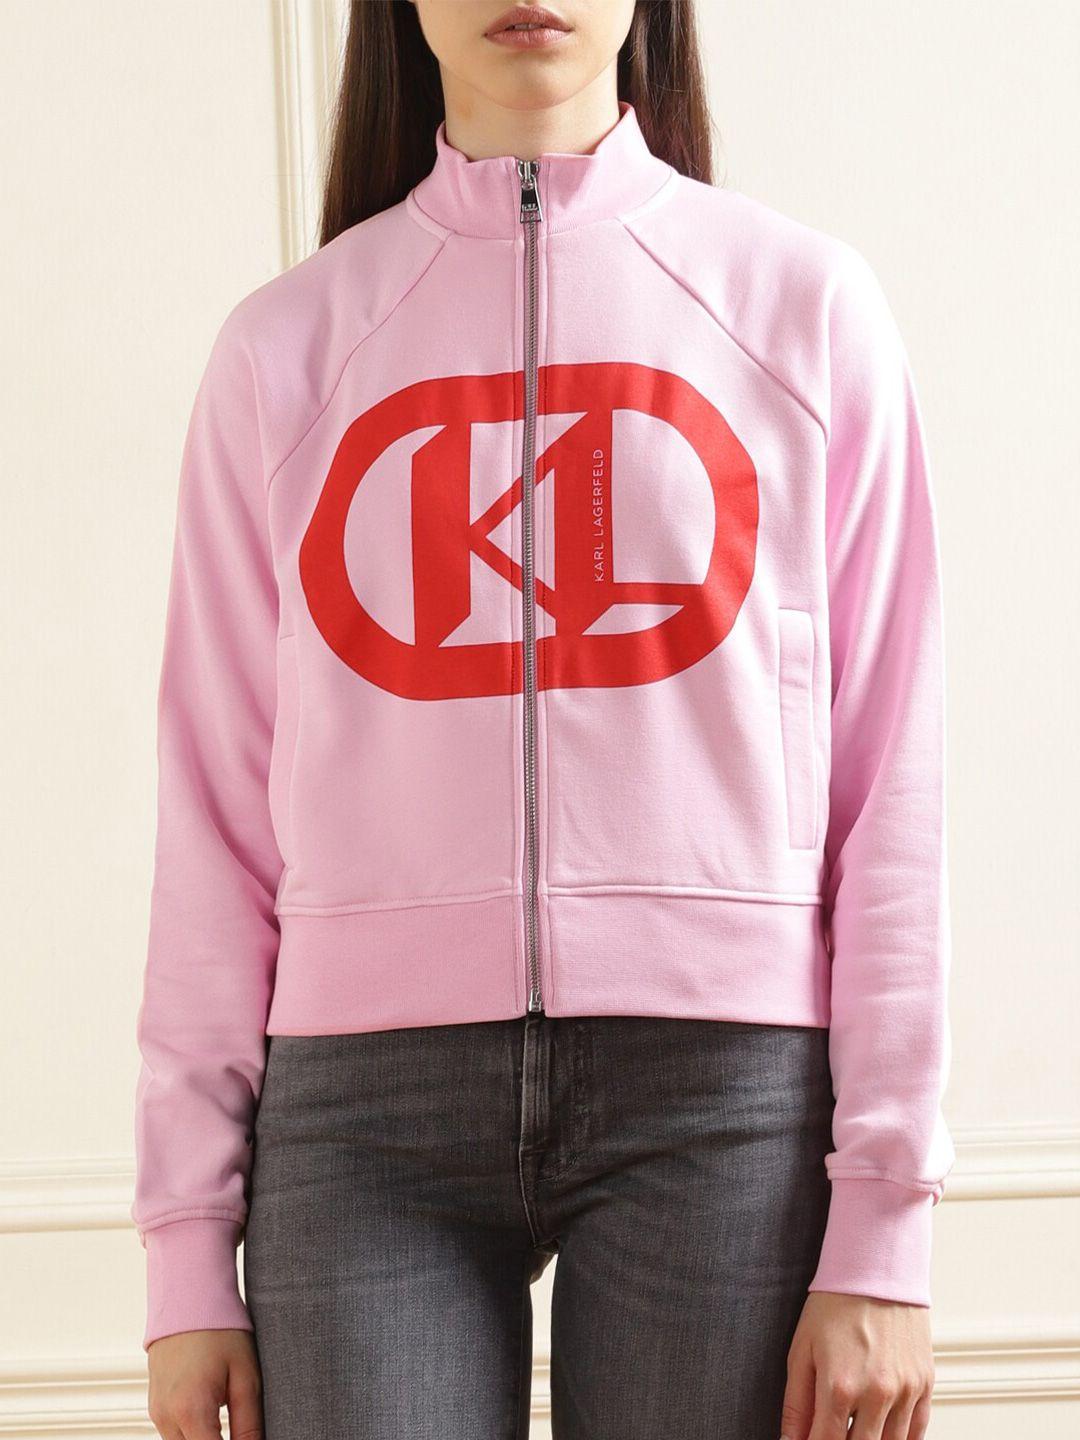 karl lagerfeld brand logo printed mock collar front-open sweatshirt